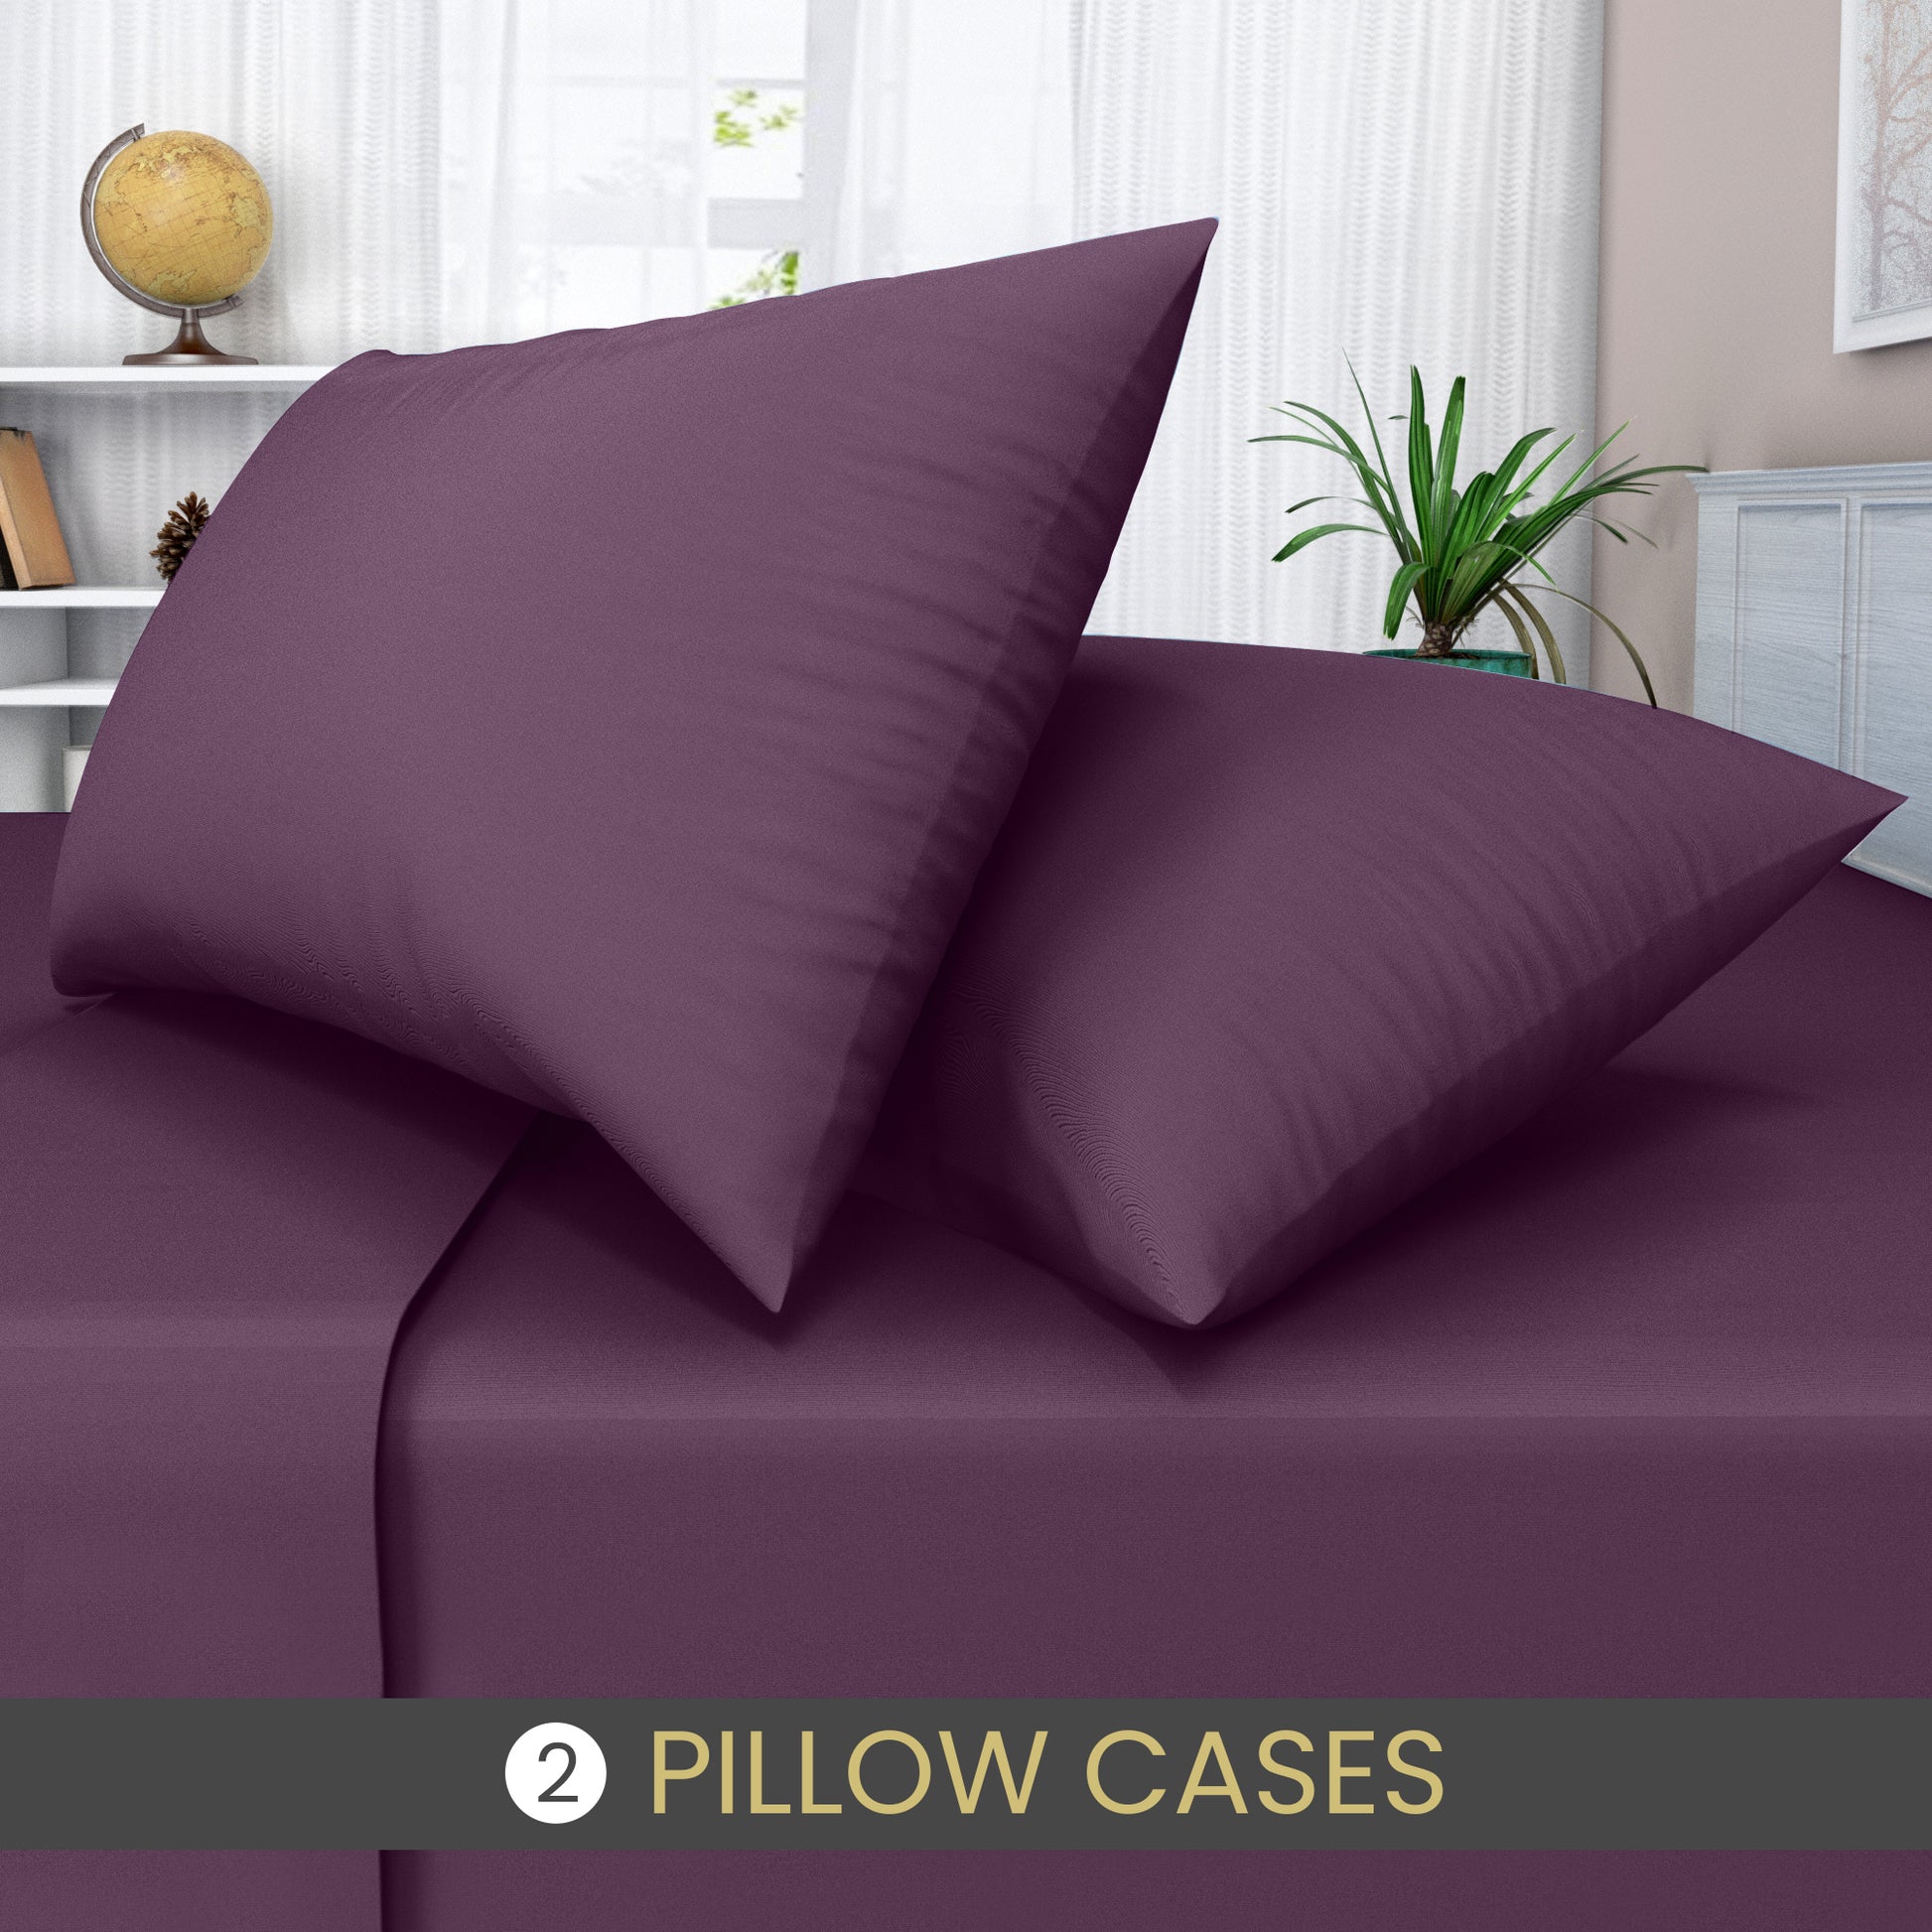 plum pillow cases 2 pack